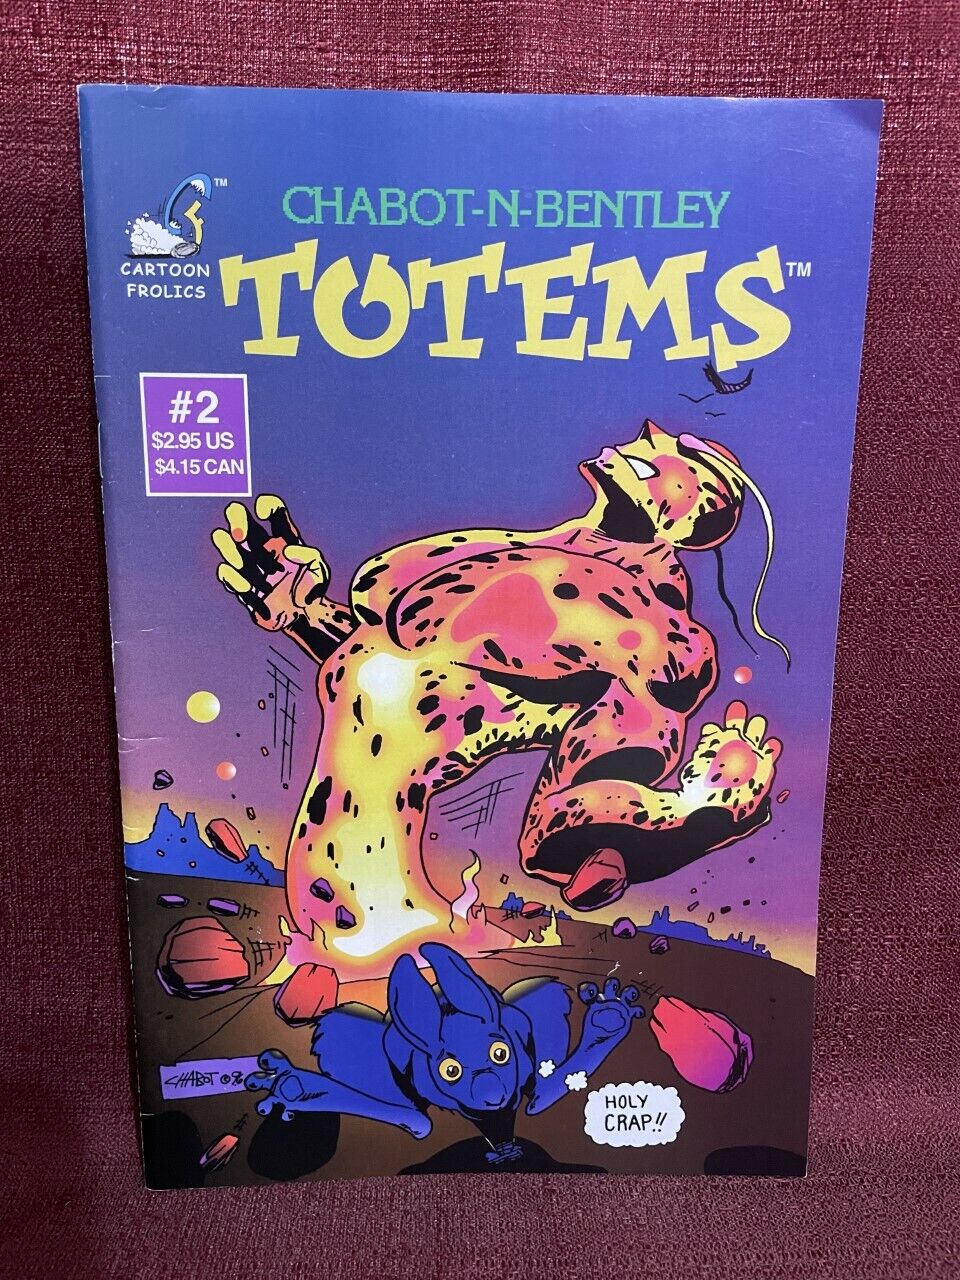 Totems #2 1997 Cartoon Frolics Chabot-n-Bentley